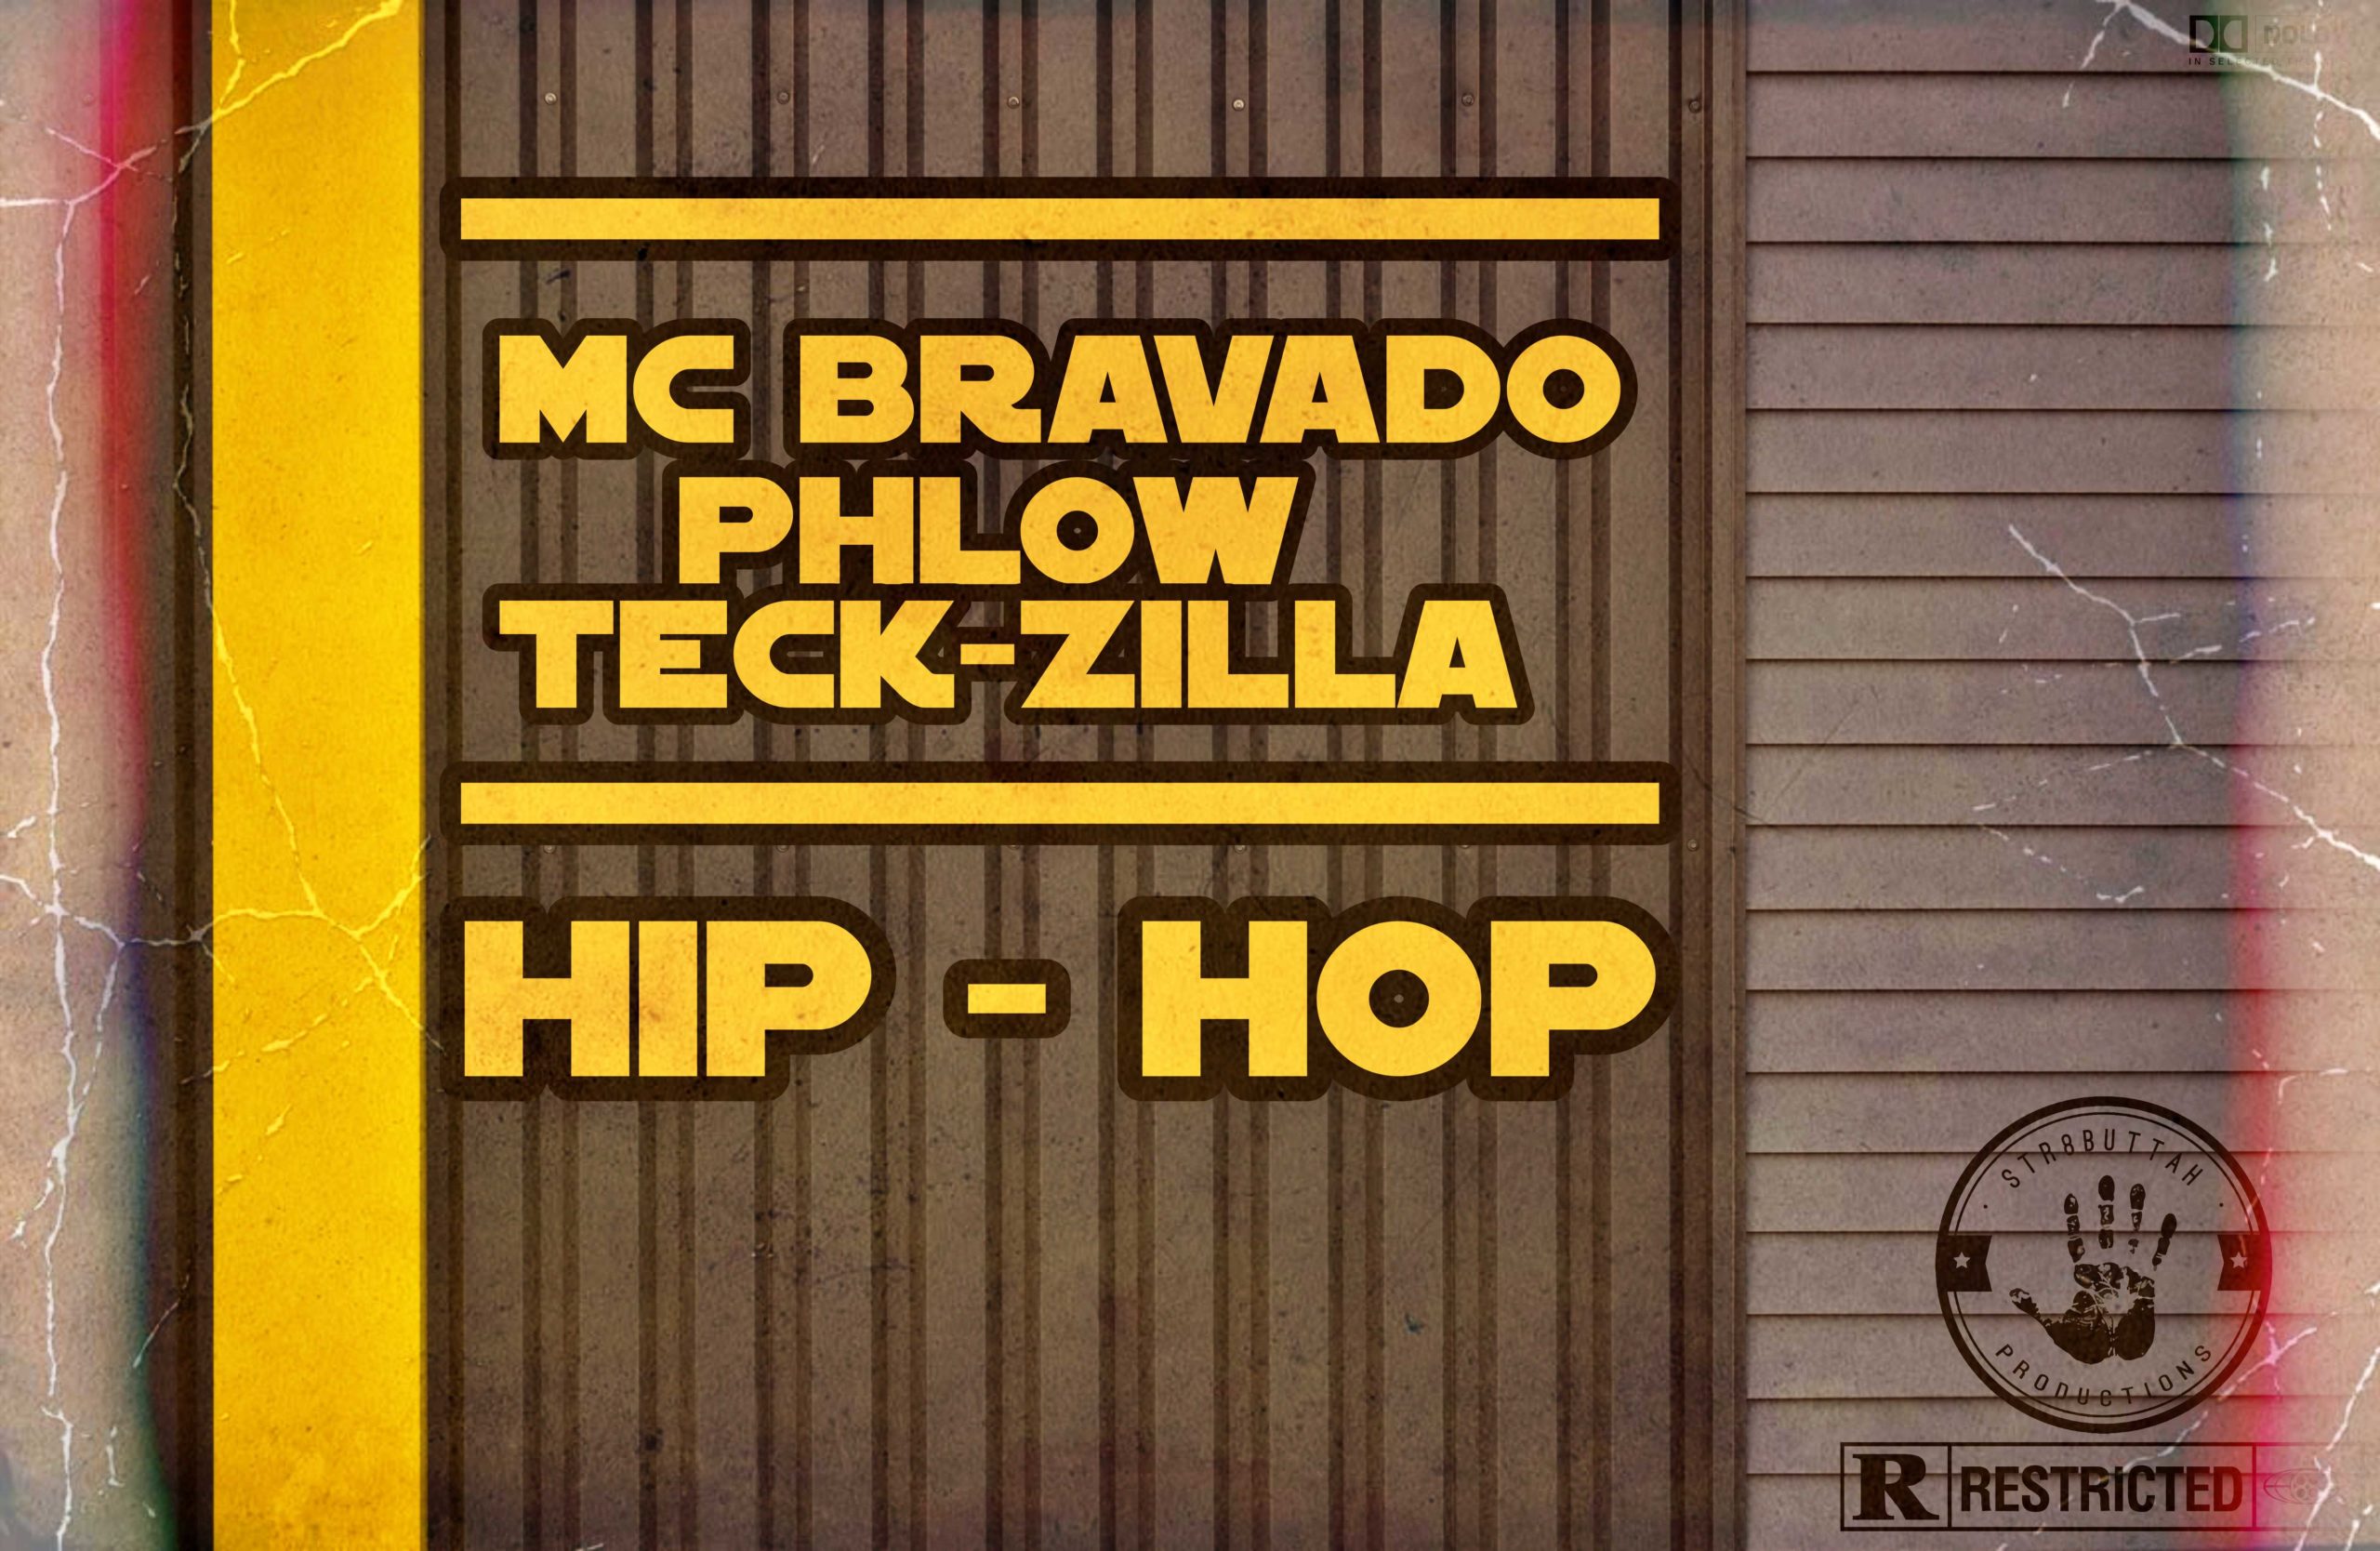 Phlow – “Hip-Hop” feat. MC Bravado